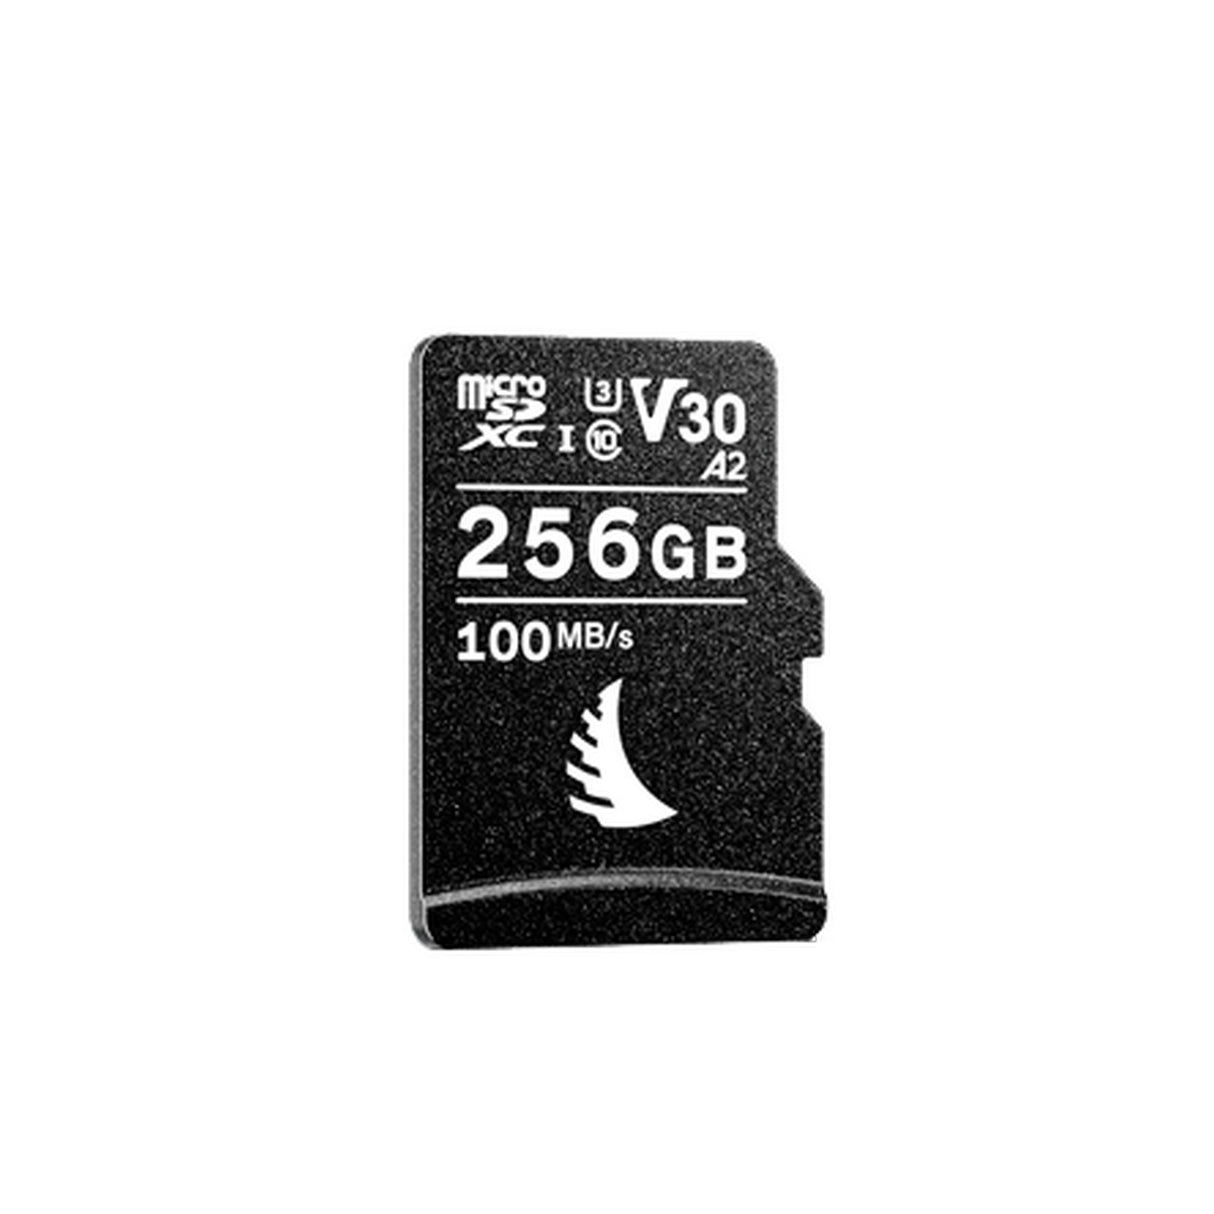 Angelbird AV PRO microSD V30 UHS-I Card, 256GB